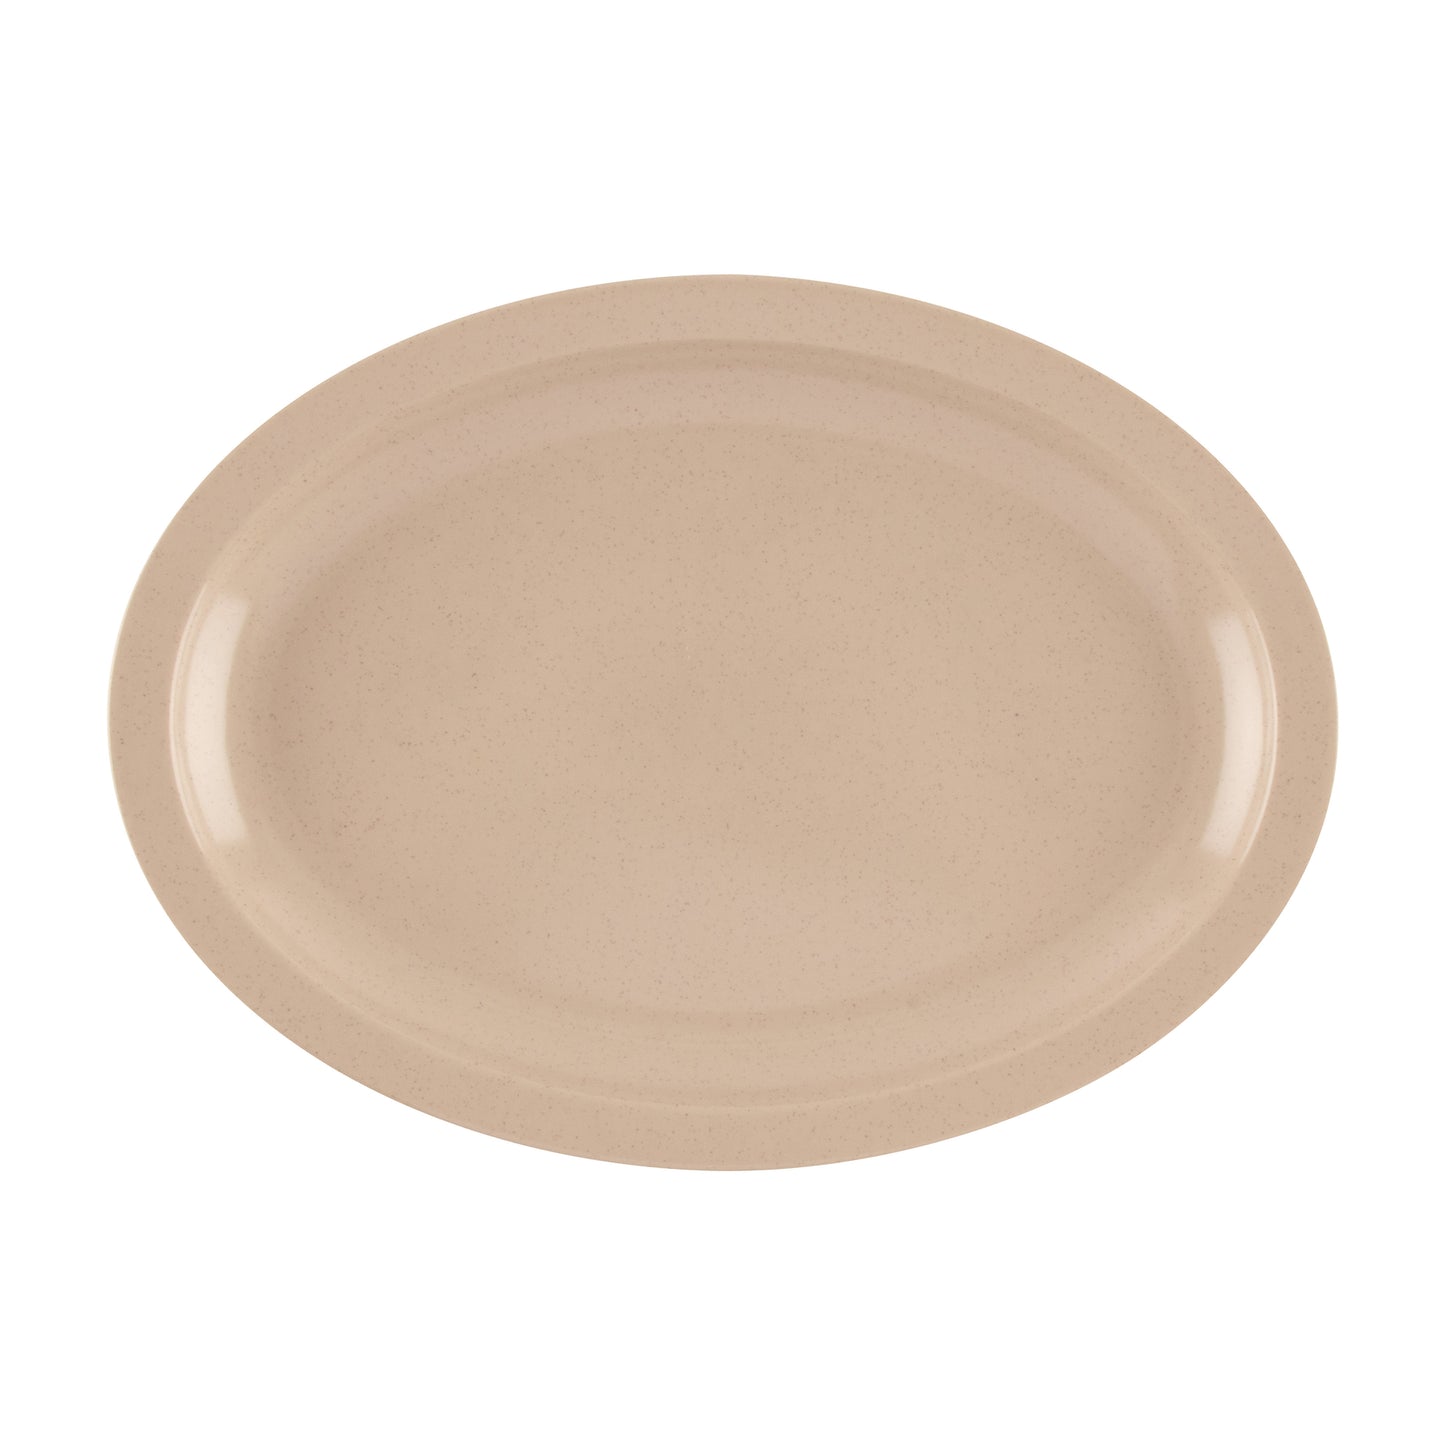 13.25" x 9.75" Oval Platter (12 Pack)